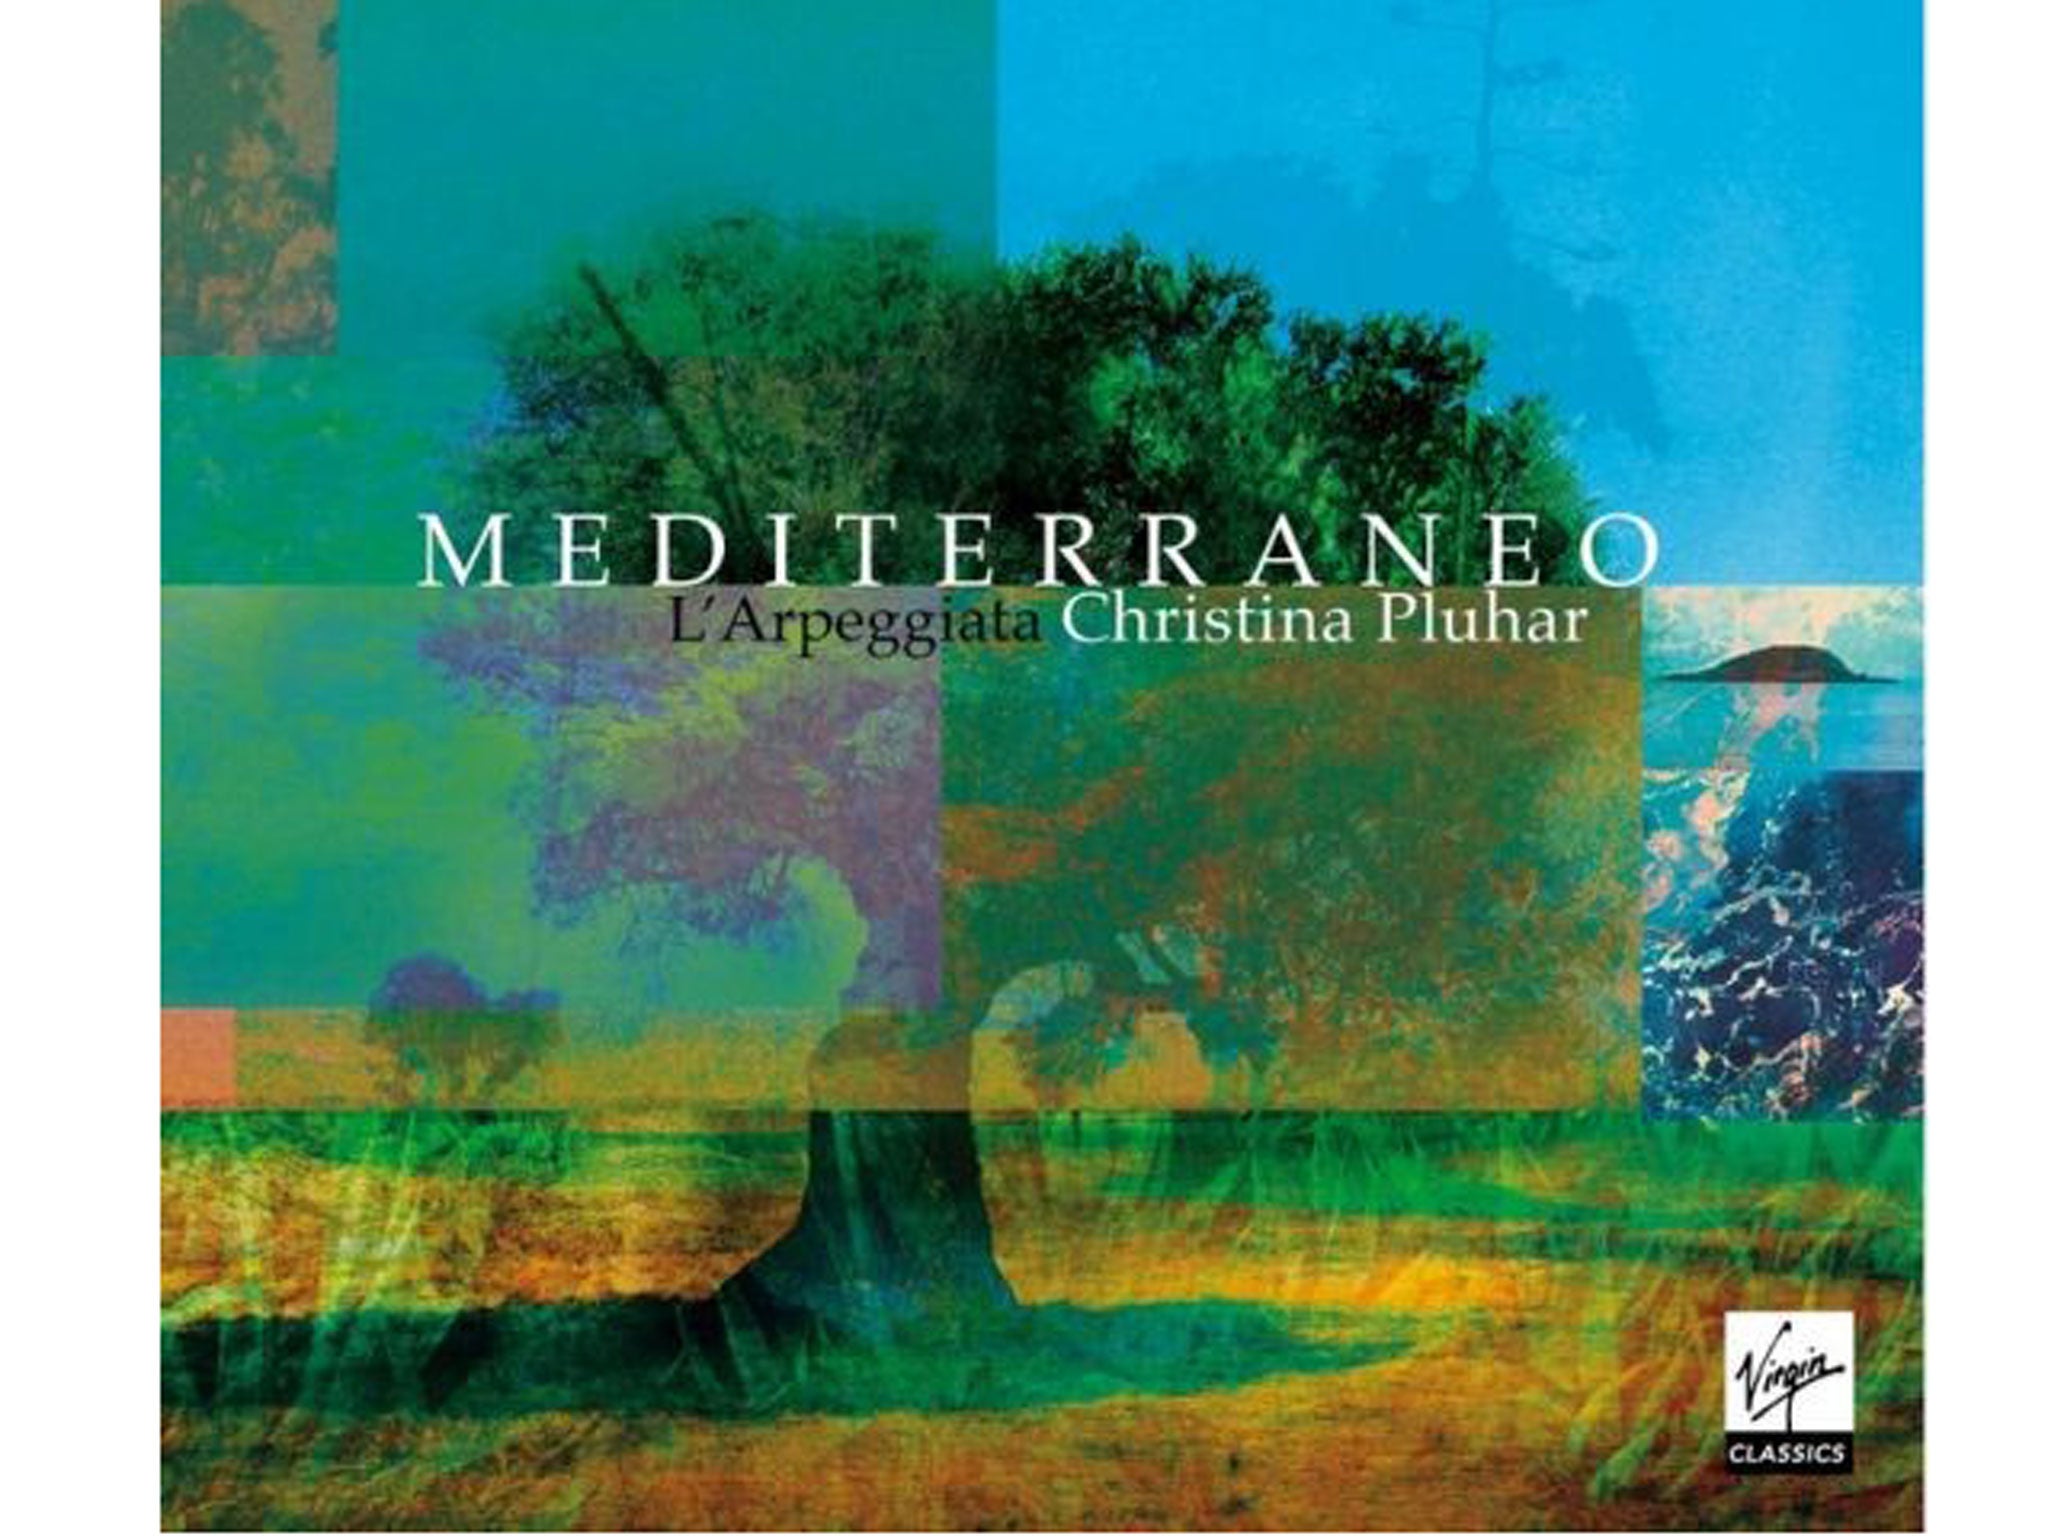 L'Arpeggiata, Christina Pluhar, Mediterraneo (Virgin Classics)